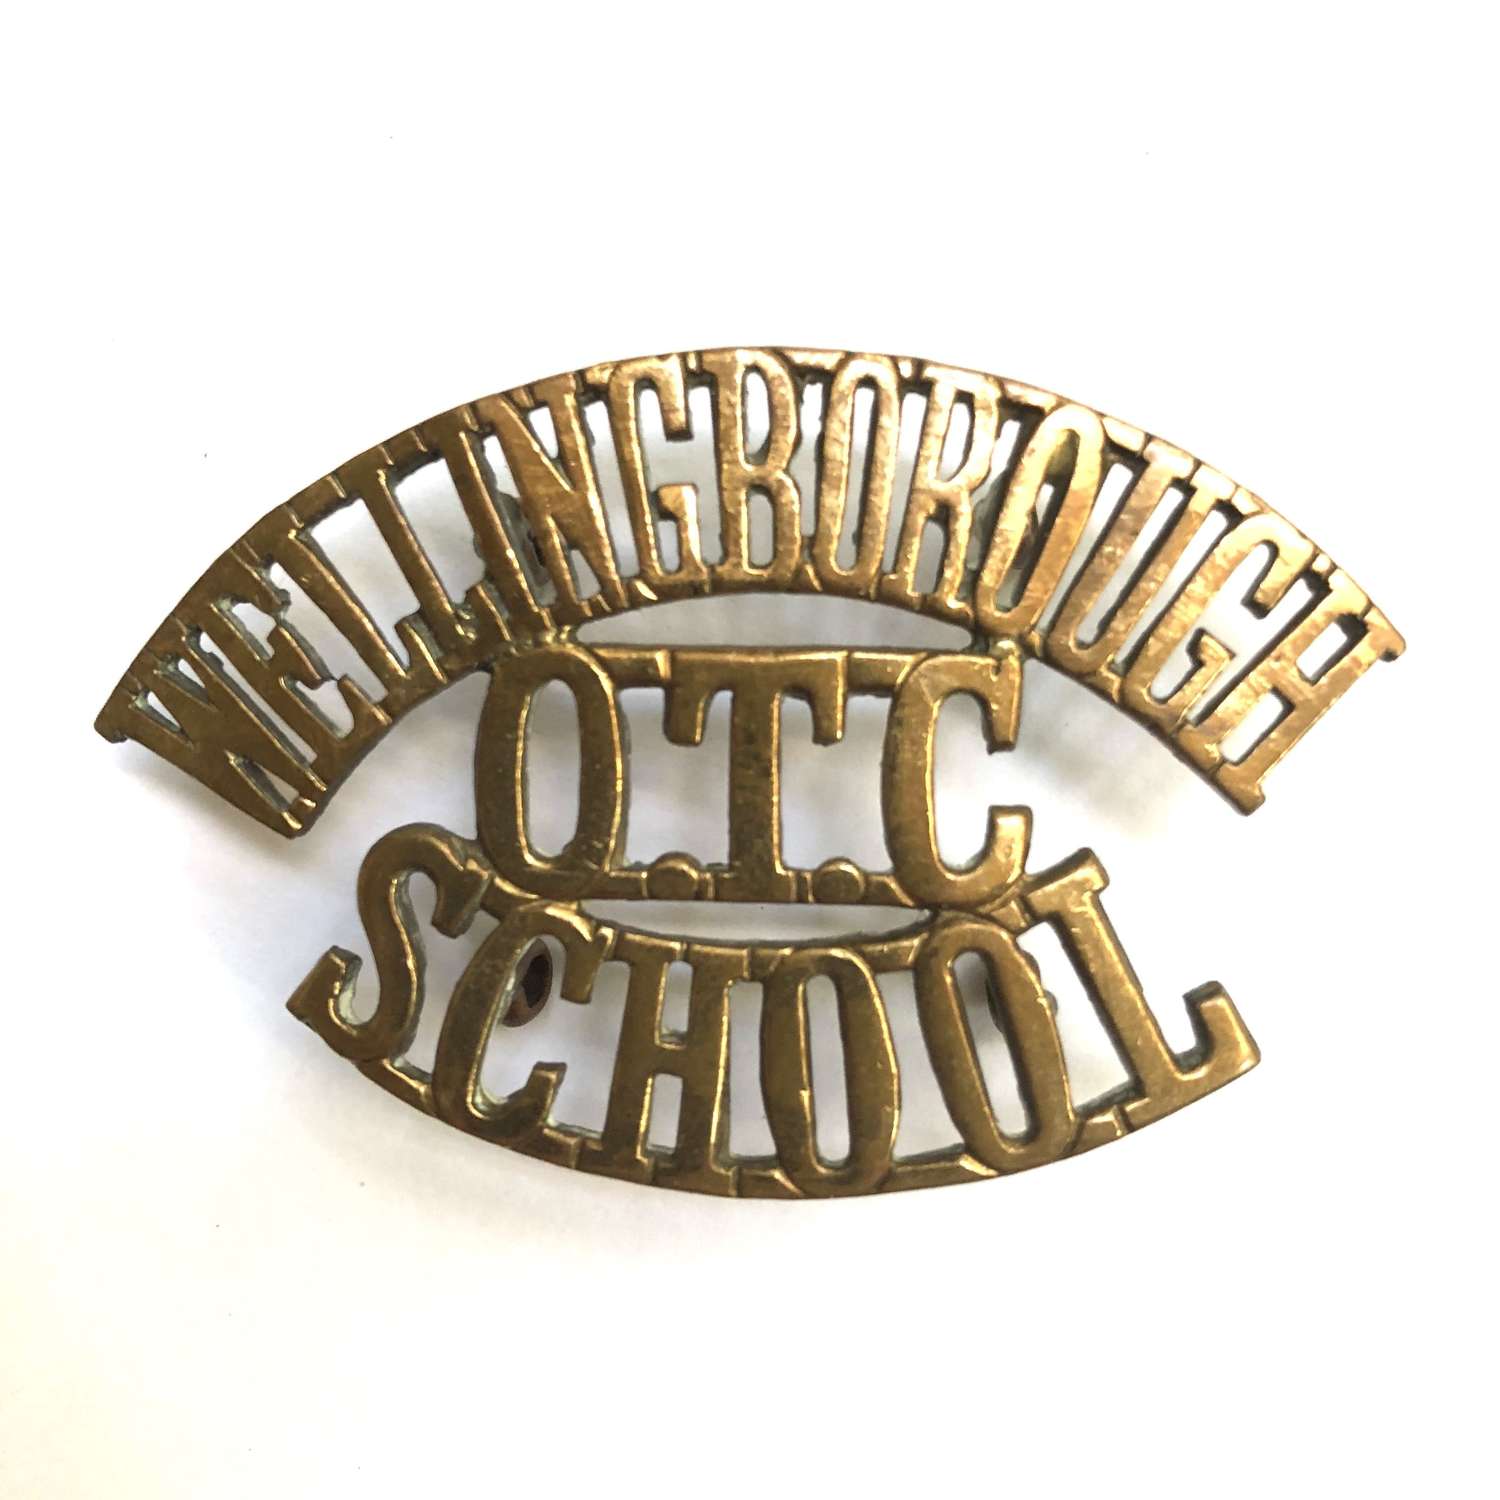 WELLINGBOROUGH / OTC / SCHOOL Northamptonshire title circa 1908-40